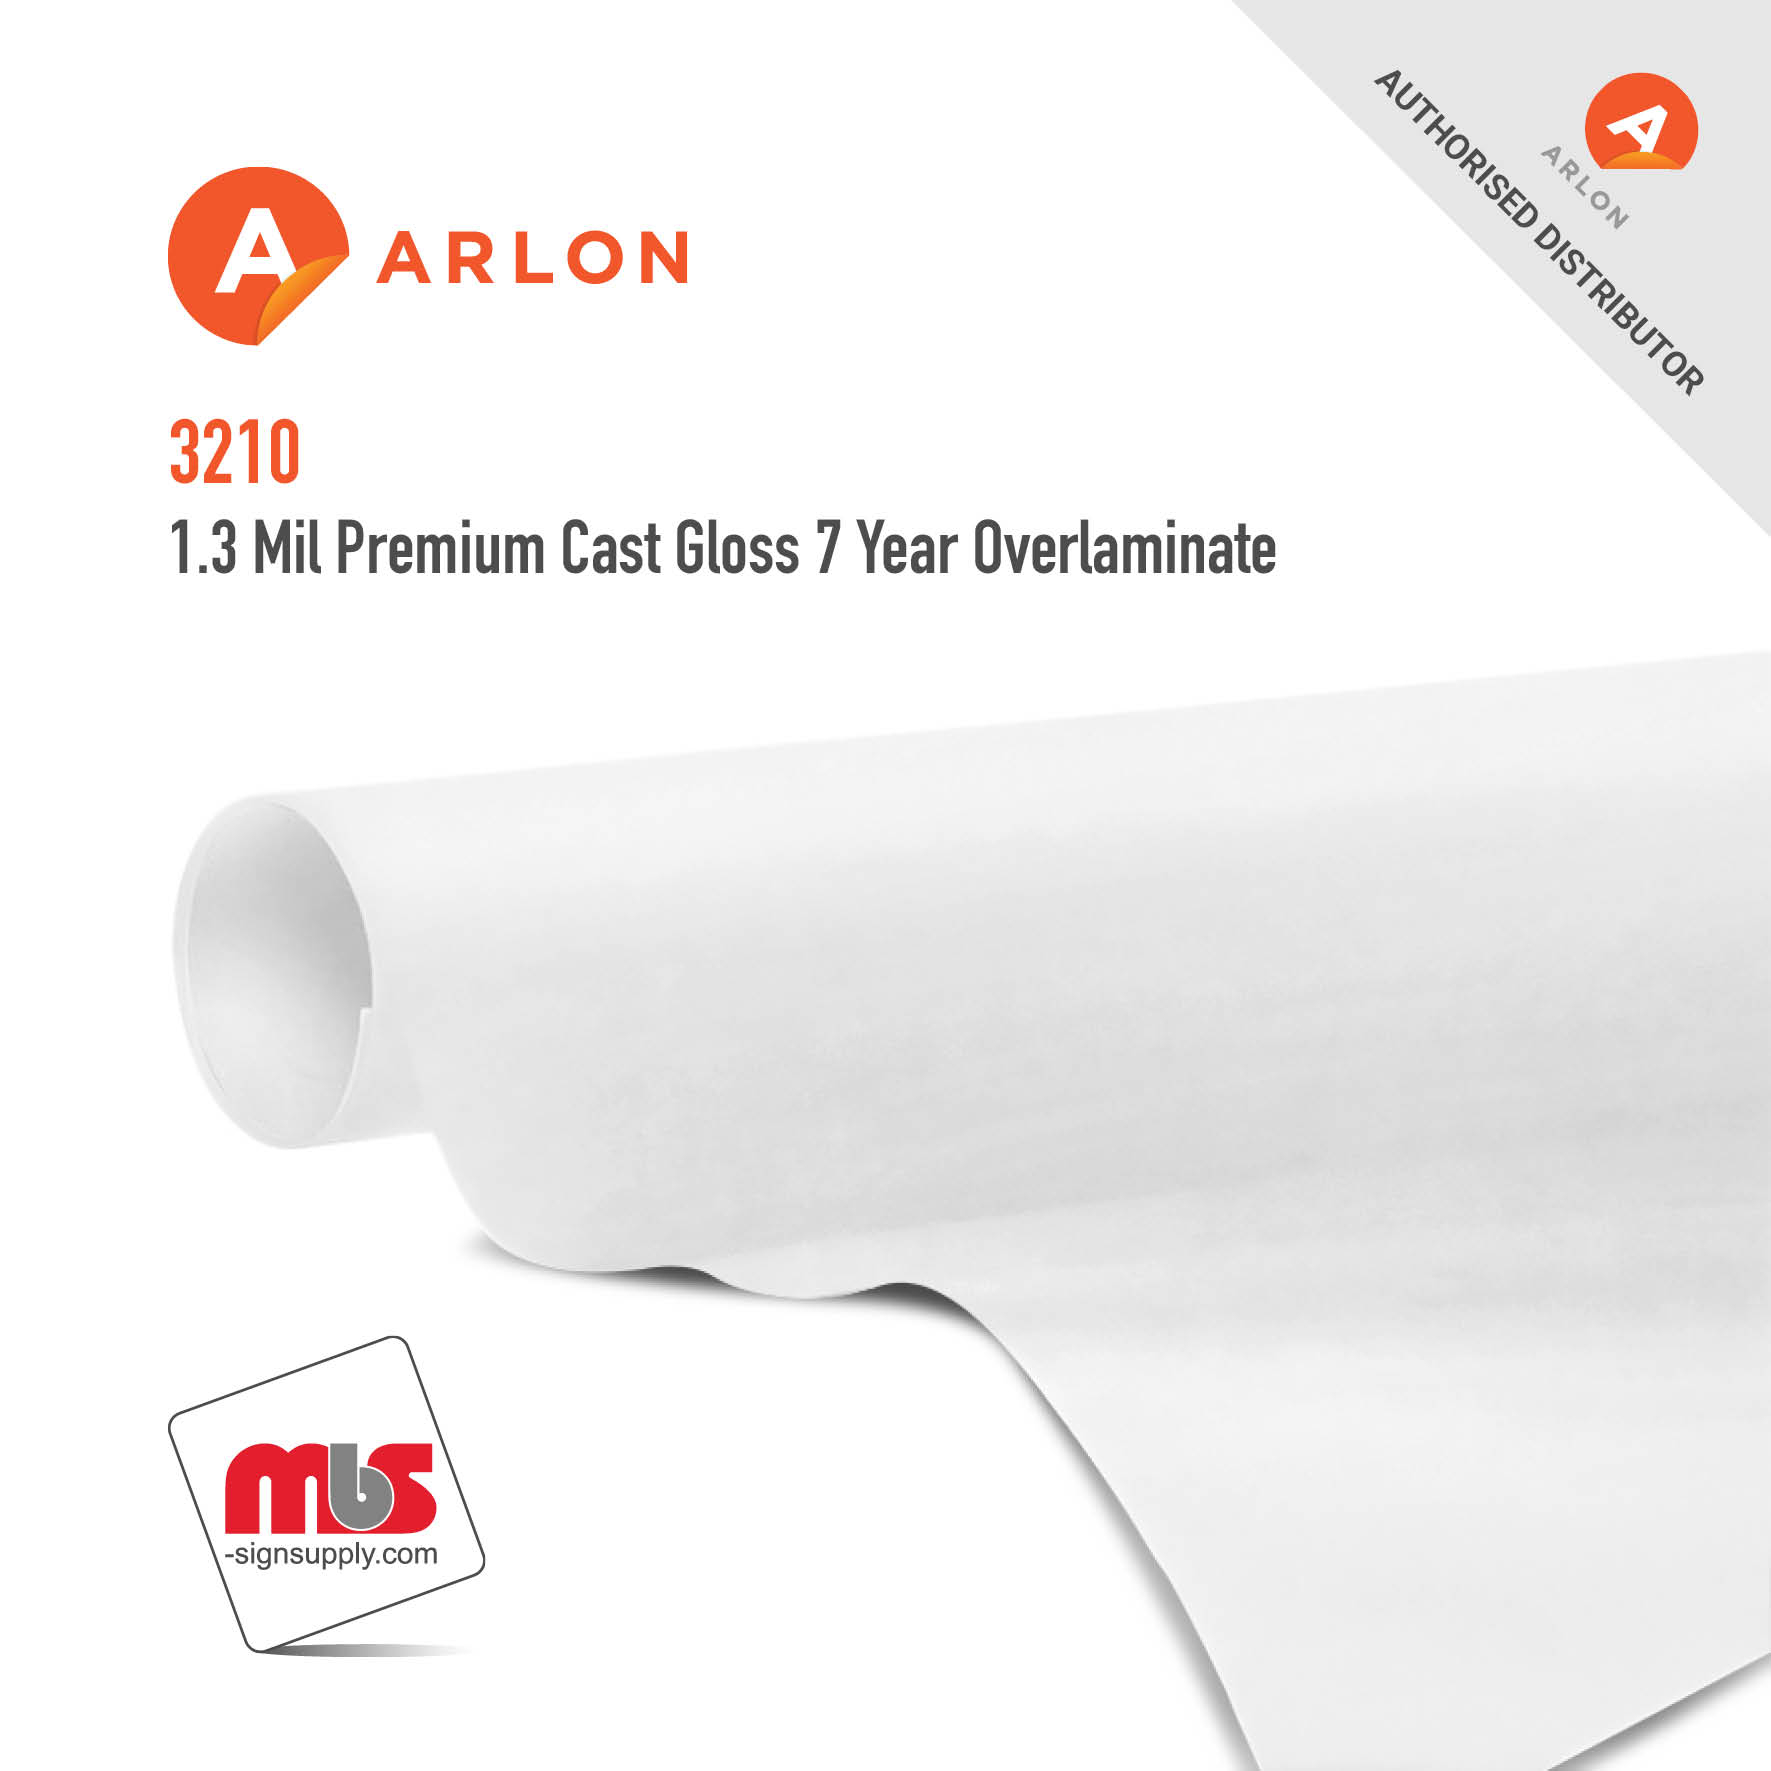 48'' x 25 Yard Roll - Arlon 3210 1.3 Mil Premium Cast Gloss 7 Year Overlaminate